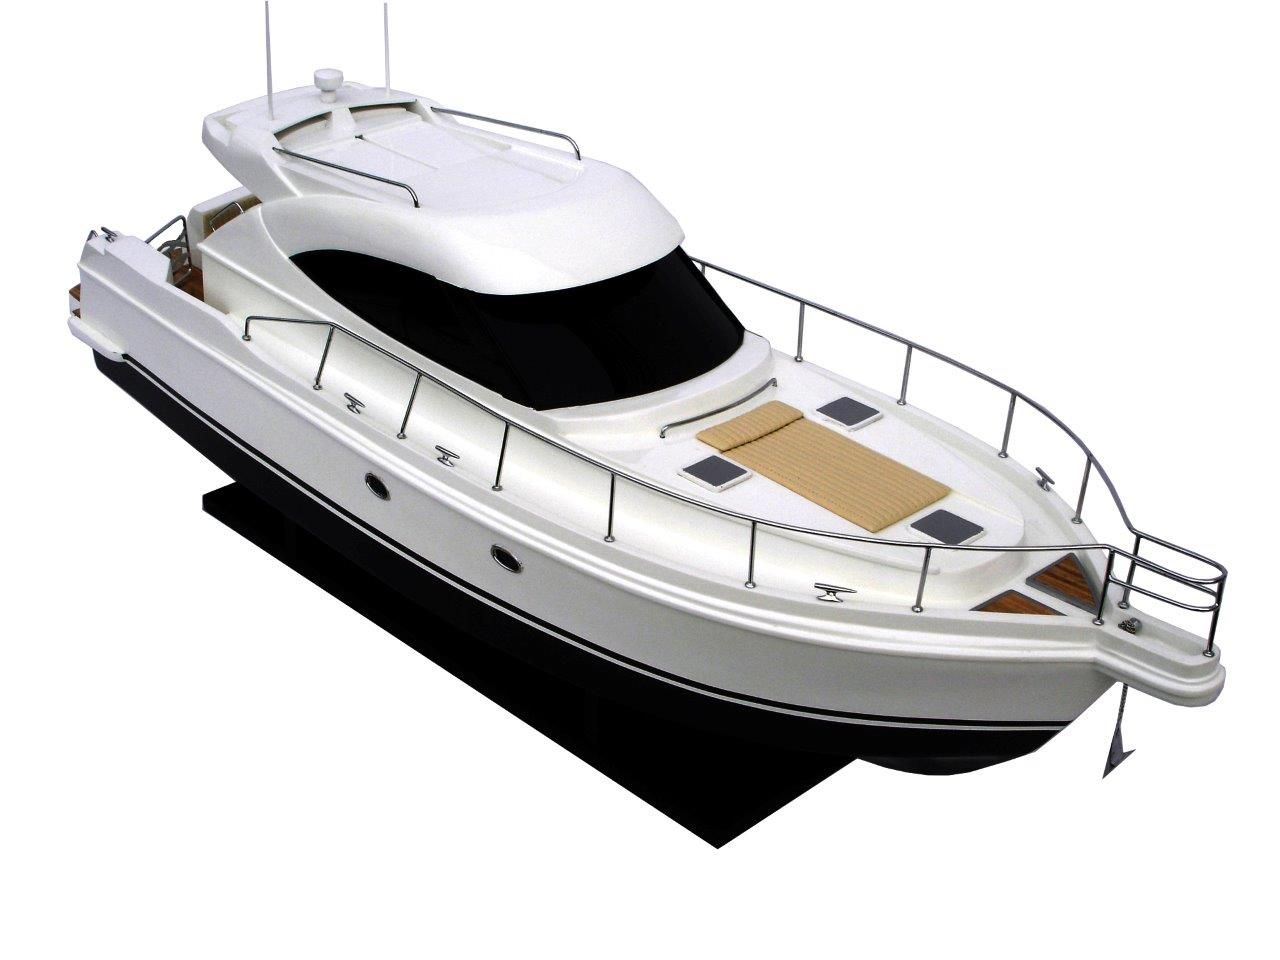 Riviera 4700 Model Boat - GN